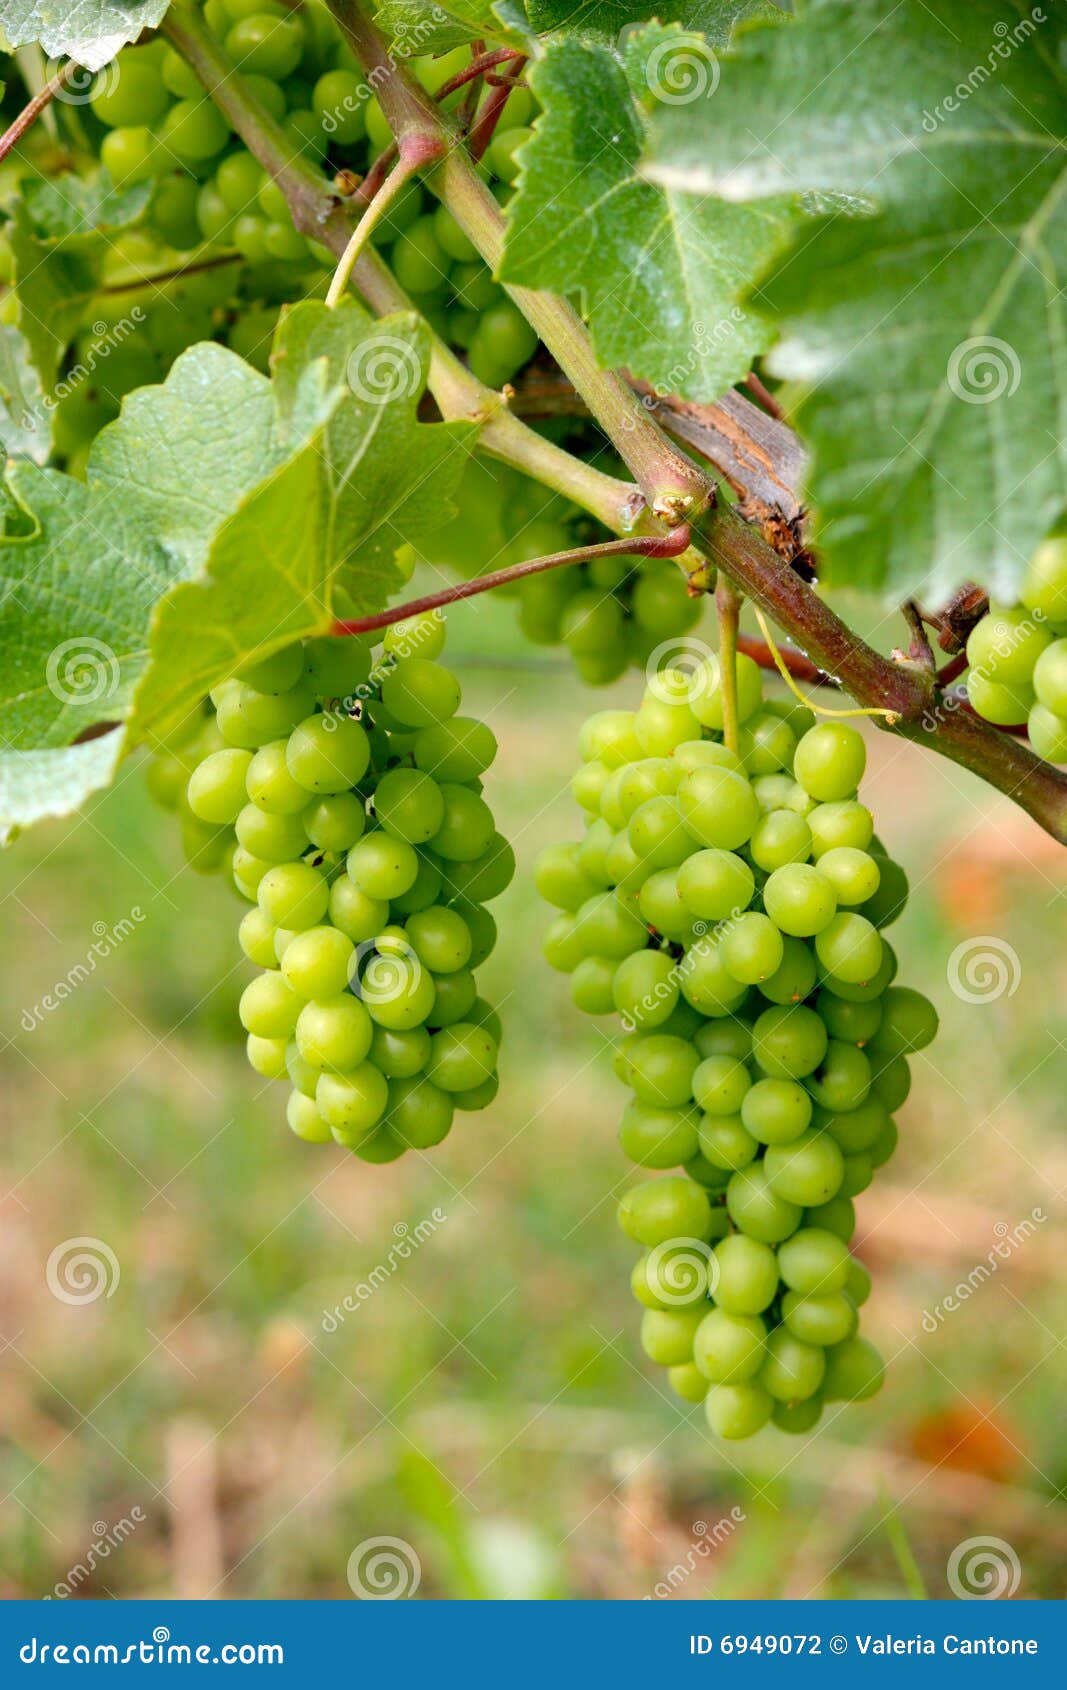 barolo grapes in italy